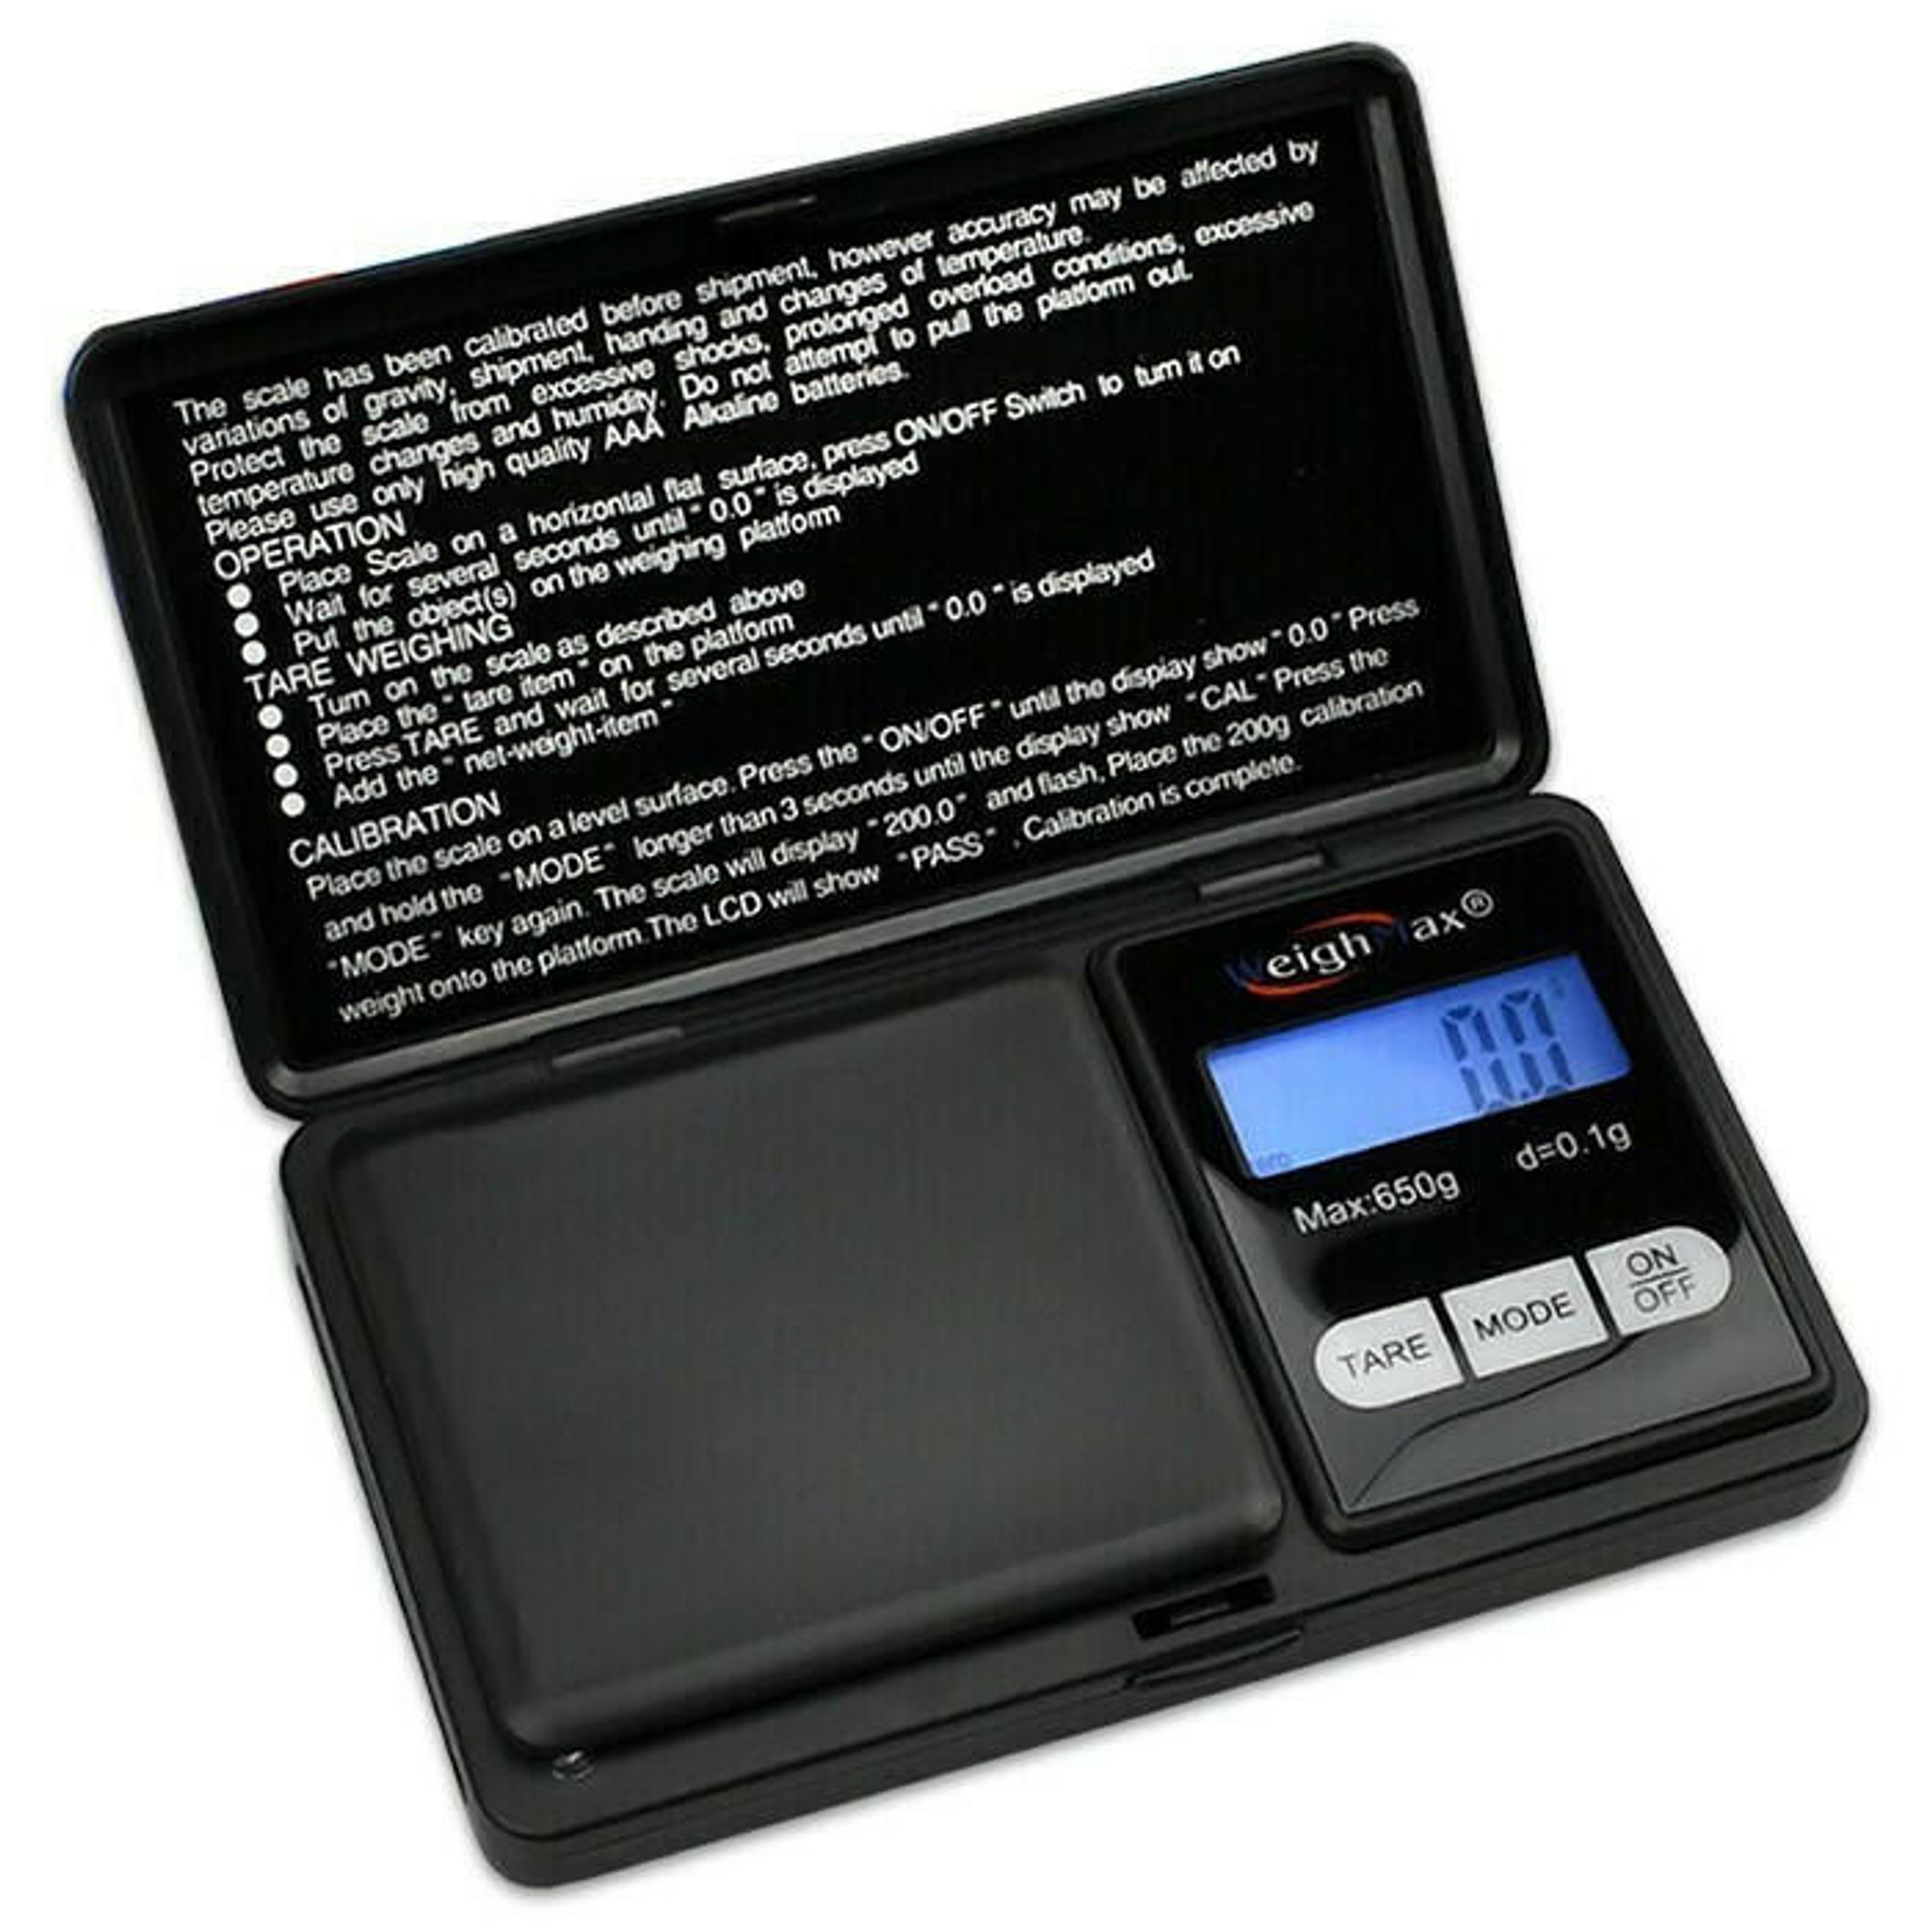 Smart Weigh Pro Pocket Digital Scale - TOP2KG - 70.54 oz./2kg Capacity  Excellent